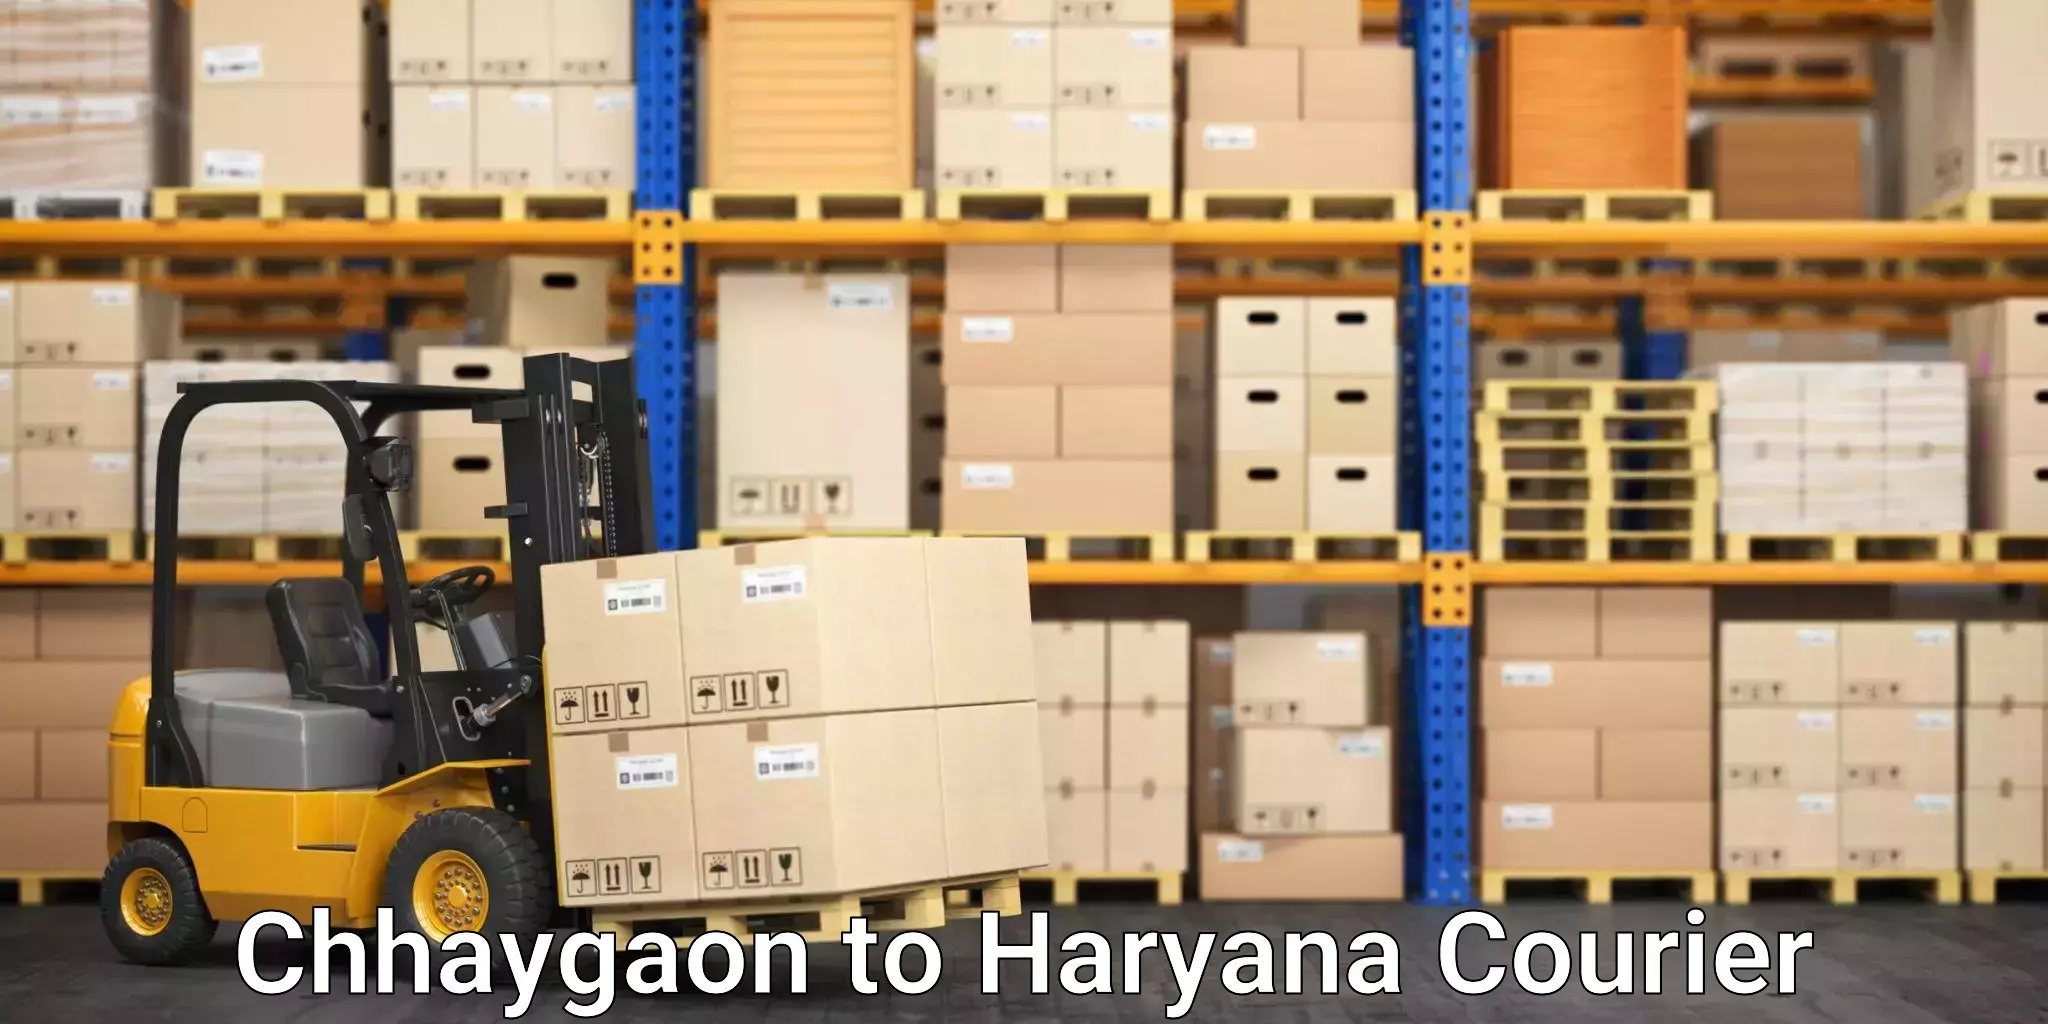 High-capacity parcel service Chhaygaon to Pataudi